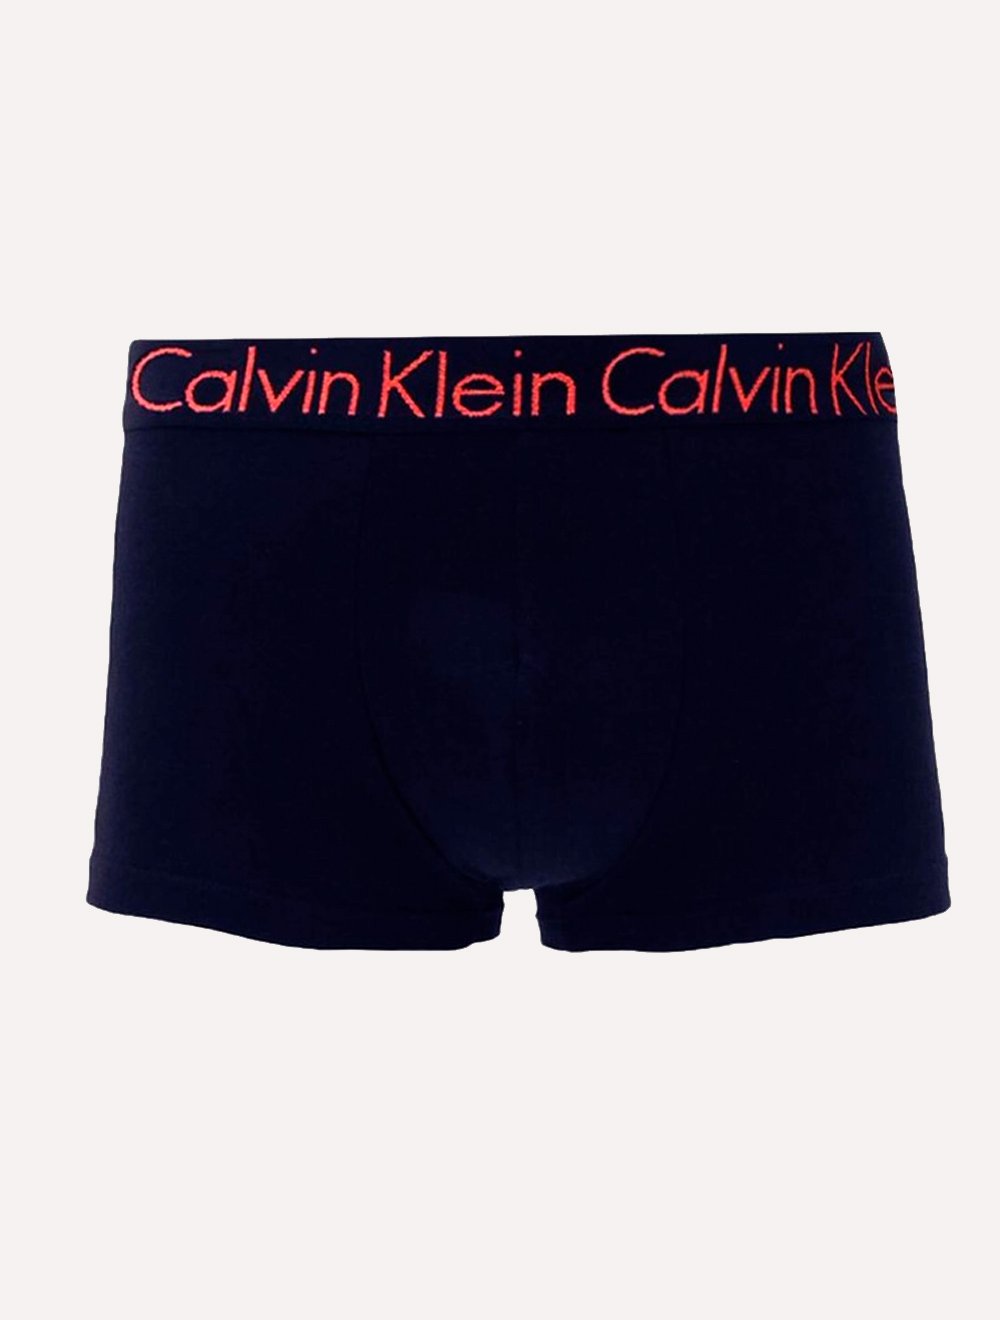 Cueca Calvin Klein Low Rise Trunk Mag Branca e Marinho Pack C11.04 AZ09 2UN